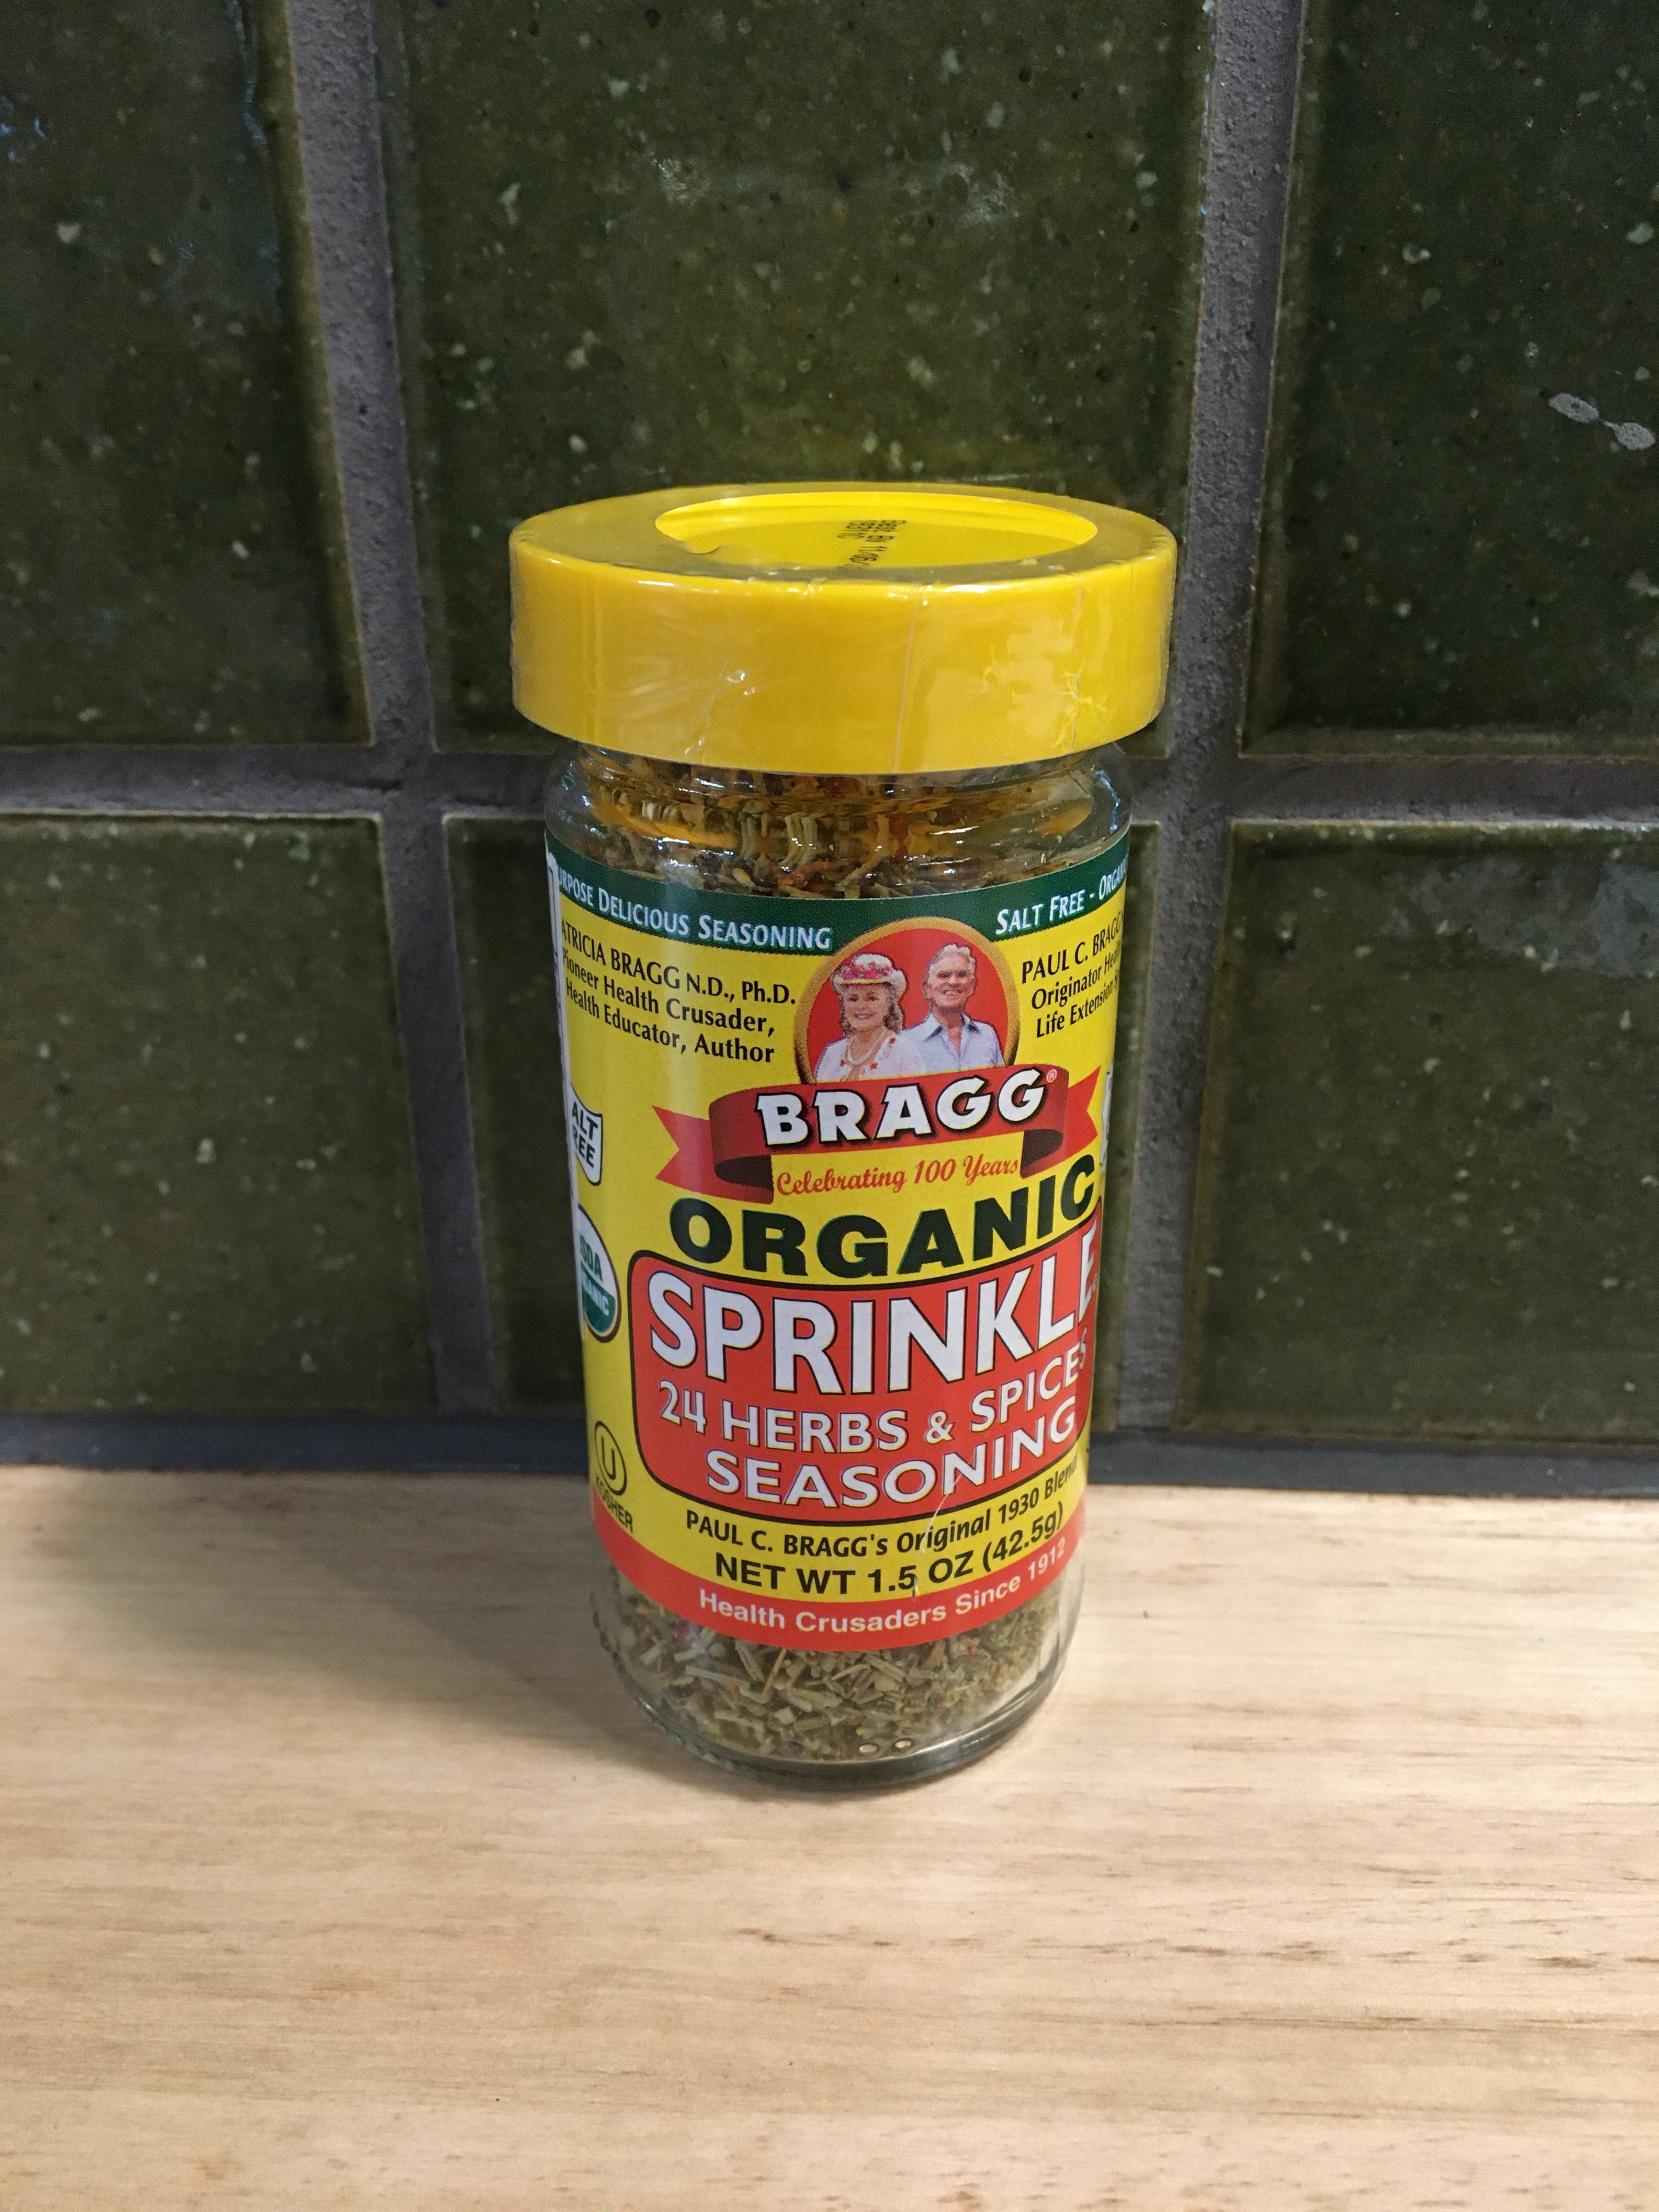 Bragg Sprinkle Seasoning 24 Herbs & Spices 42.5g – Rhubarb Rhubarb Organics